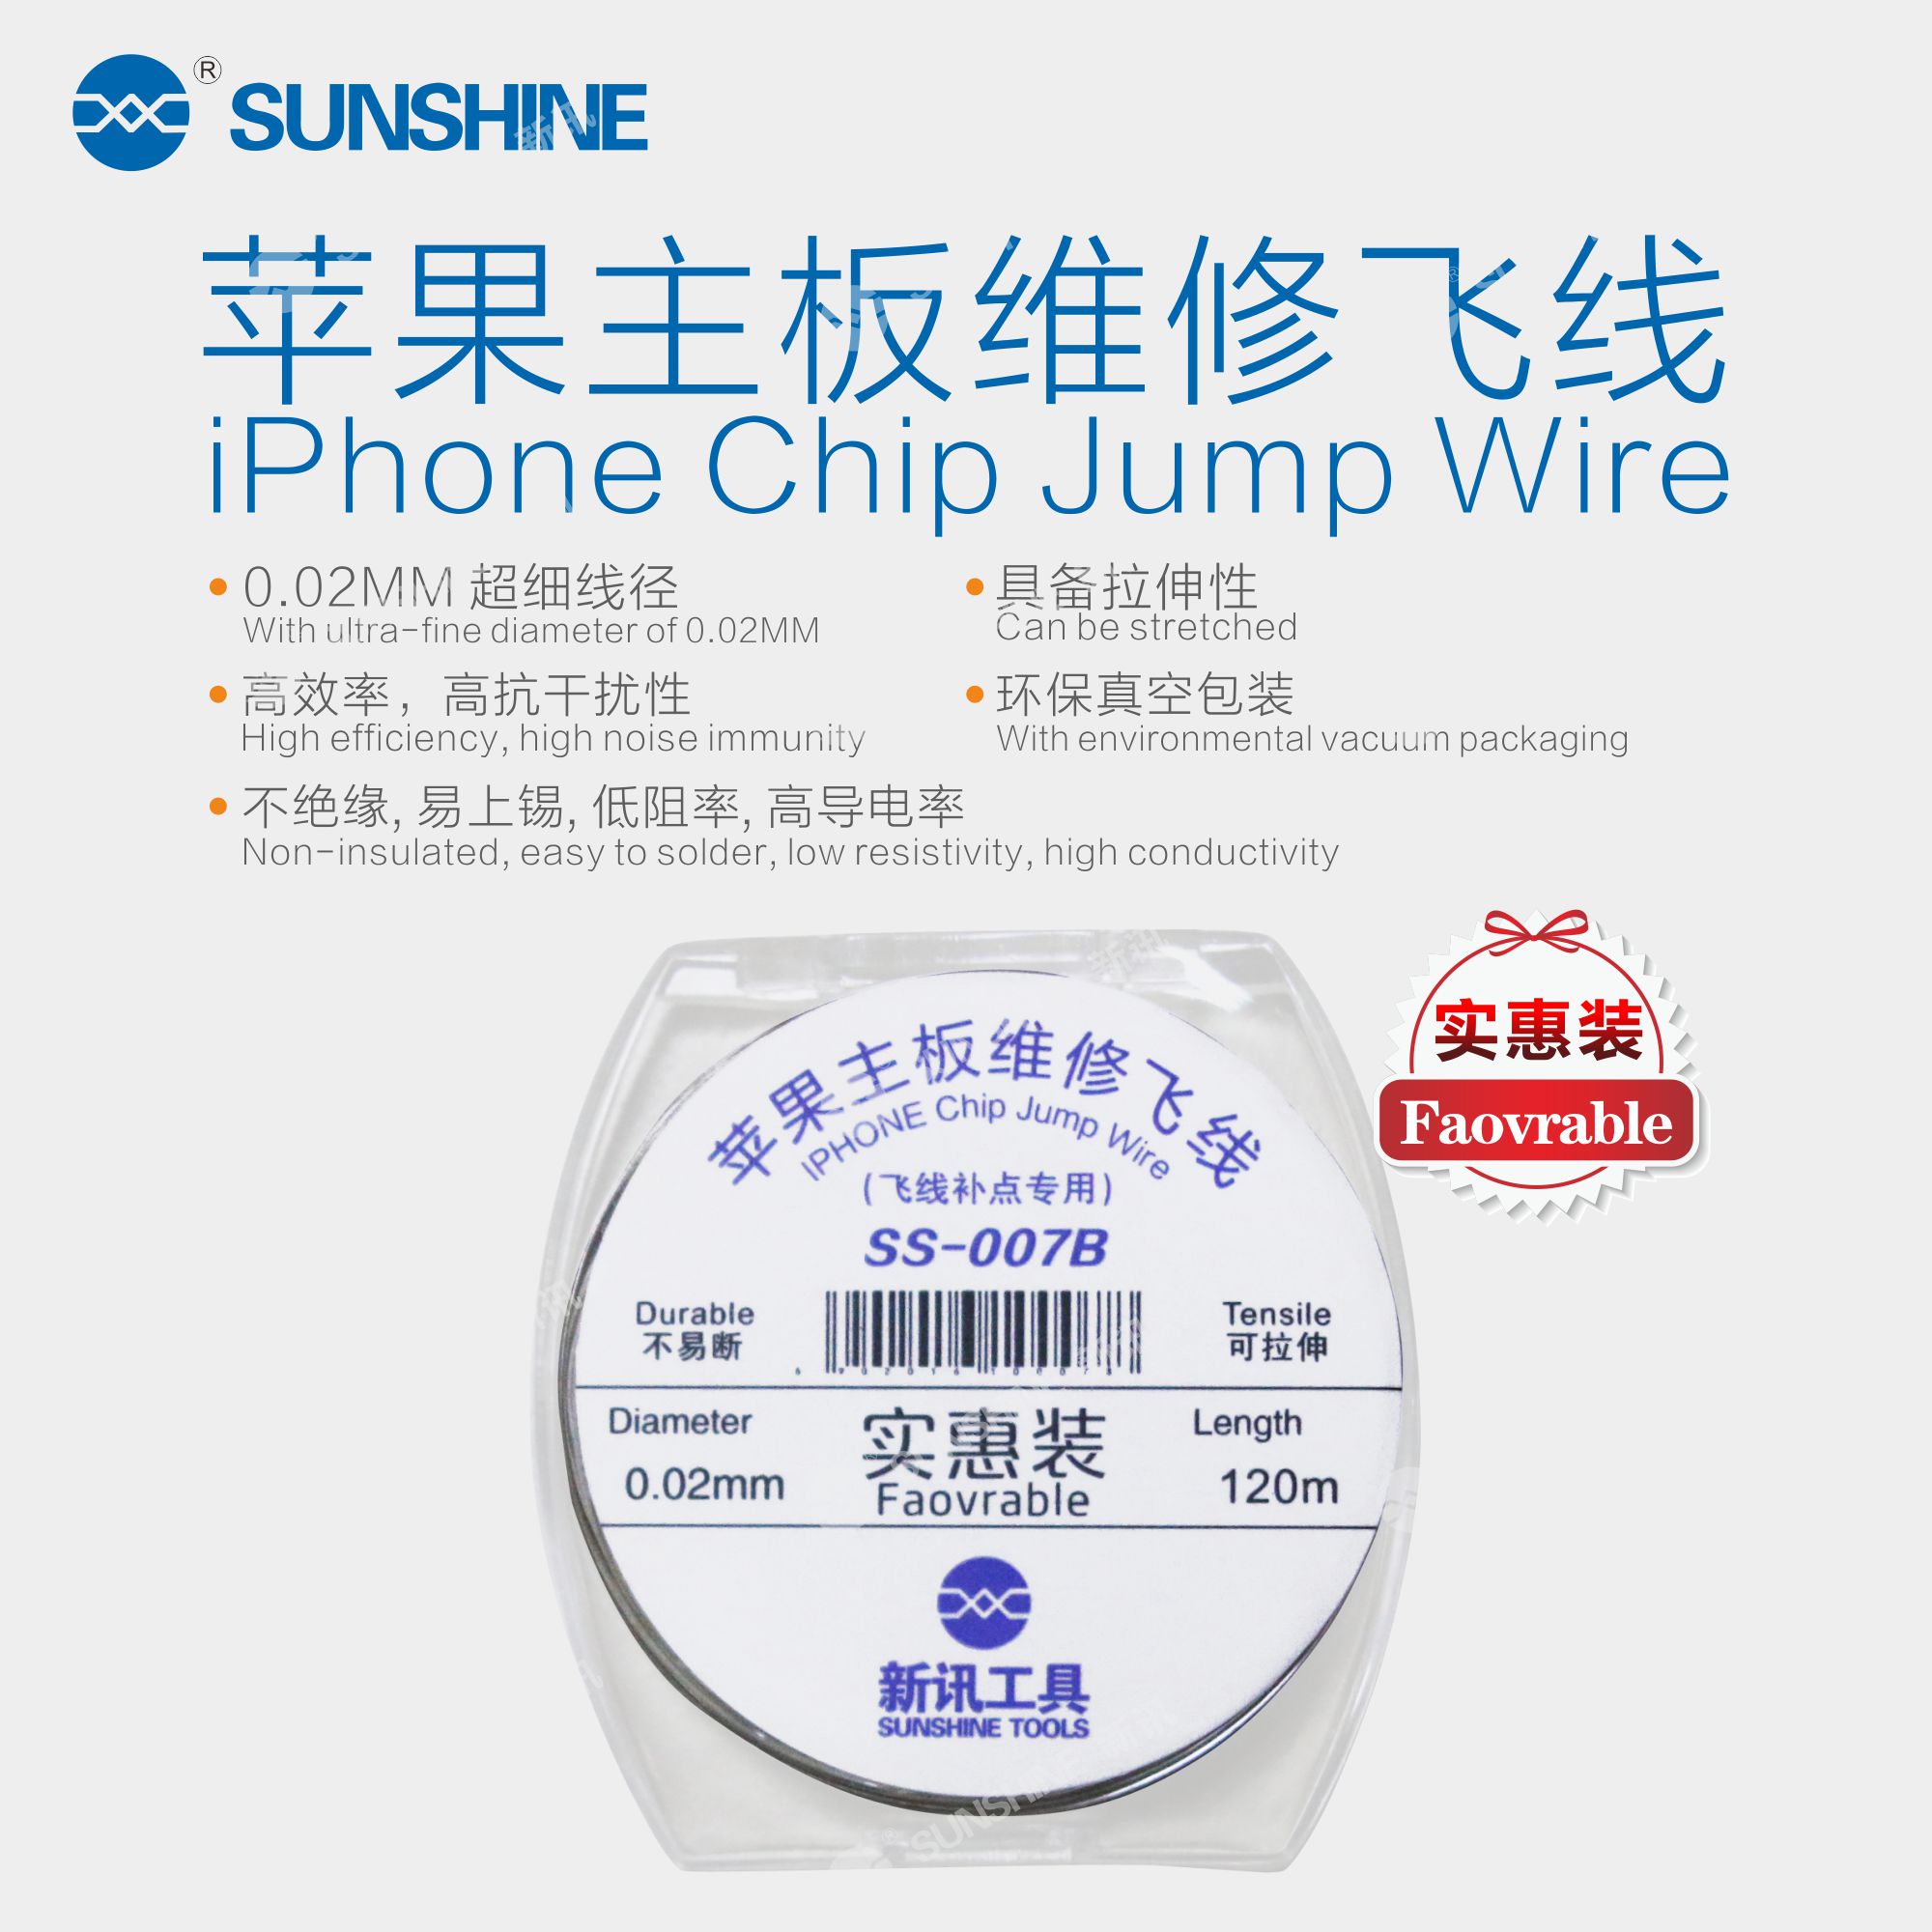 SUNSHINE SS-007B Iphone Pcb Repair Jump Wire/120M/0.02MM sunshine SS-007B Iphone Pcb Repair Jump Wire/120M/0.02MM